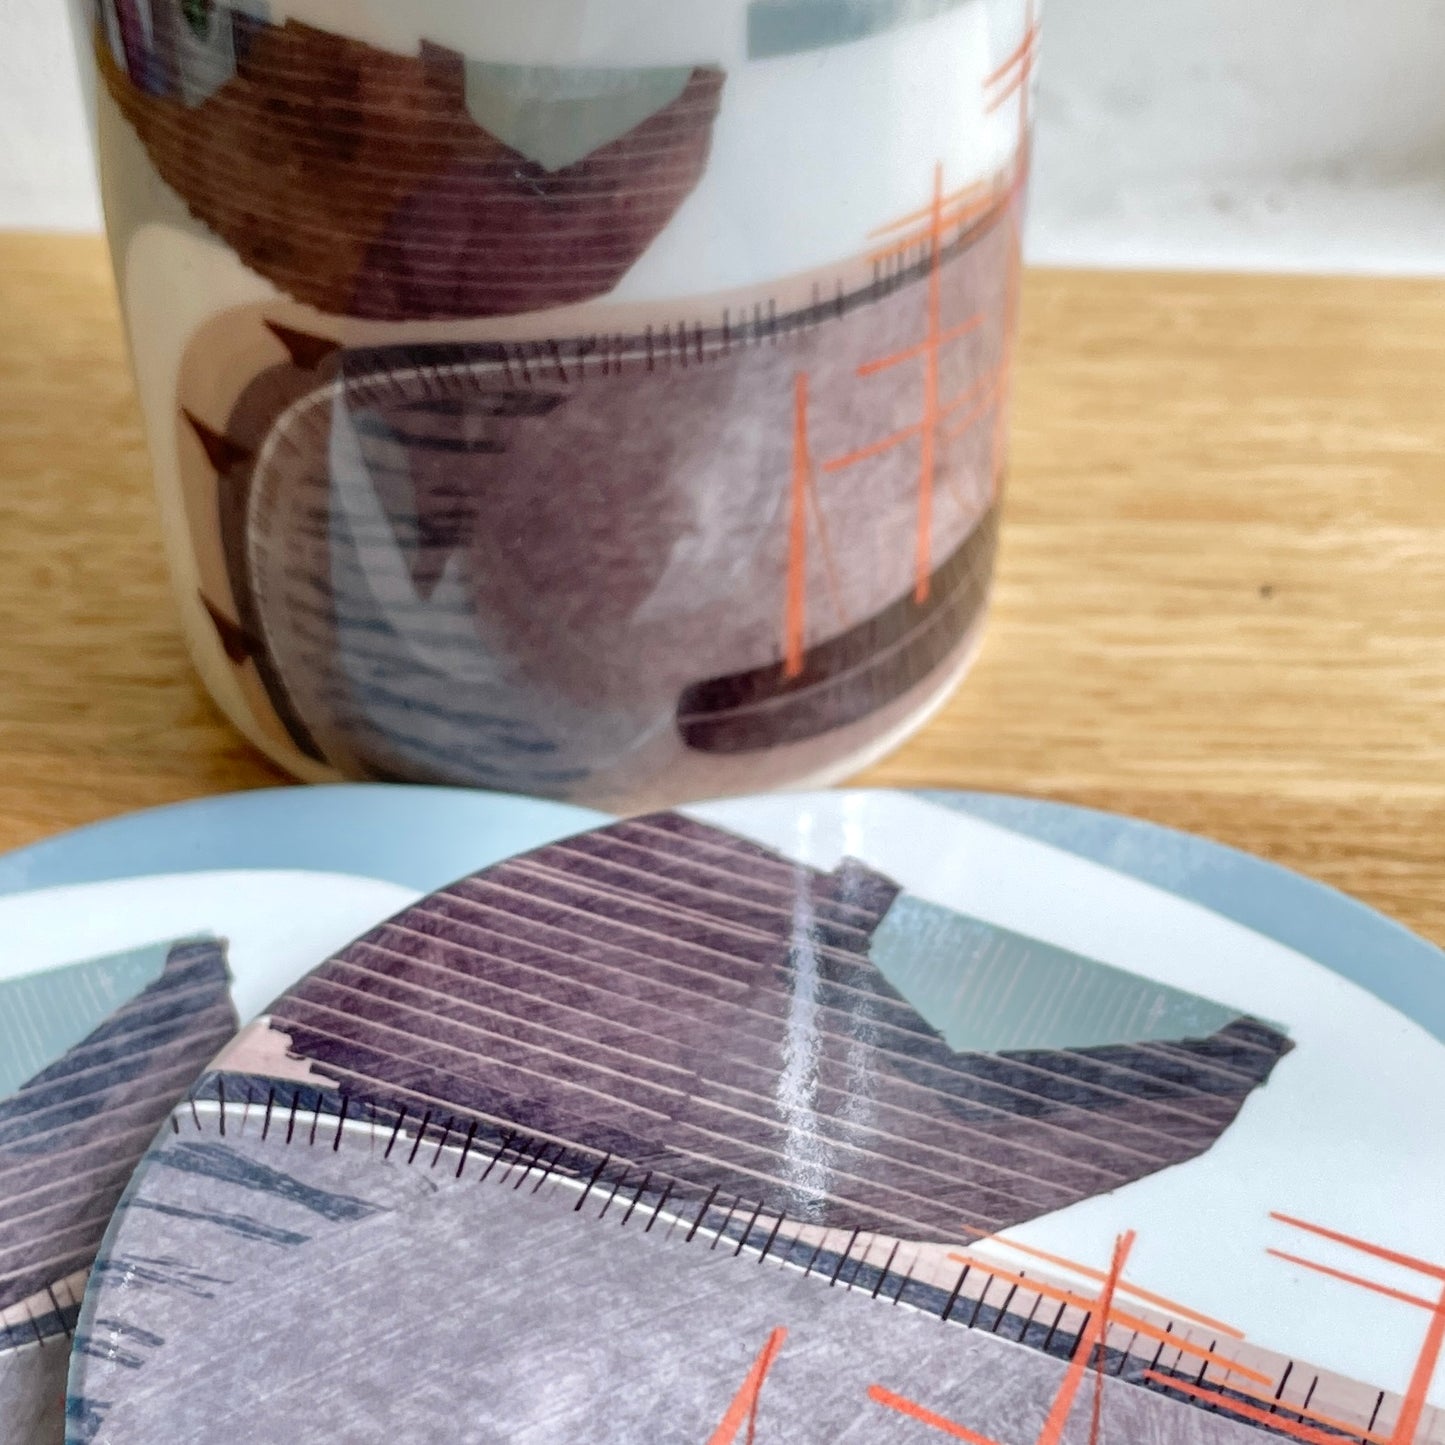 Dundee Riverside Ceramic Coaster